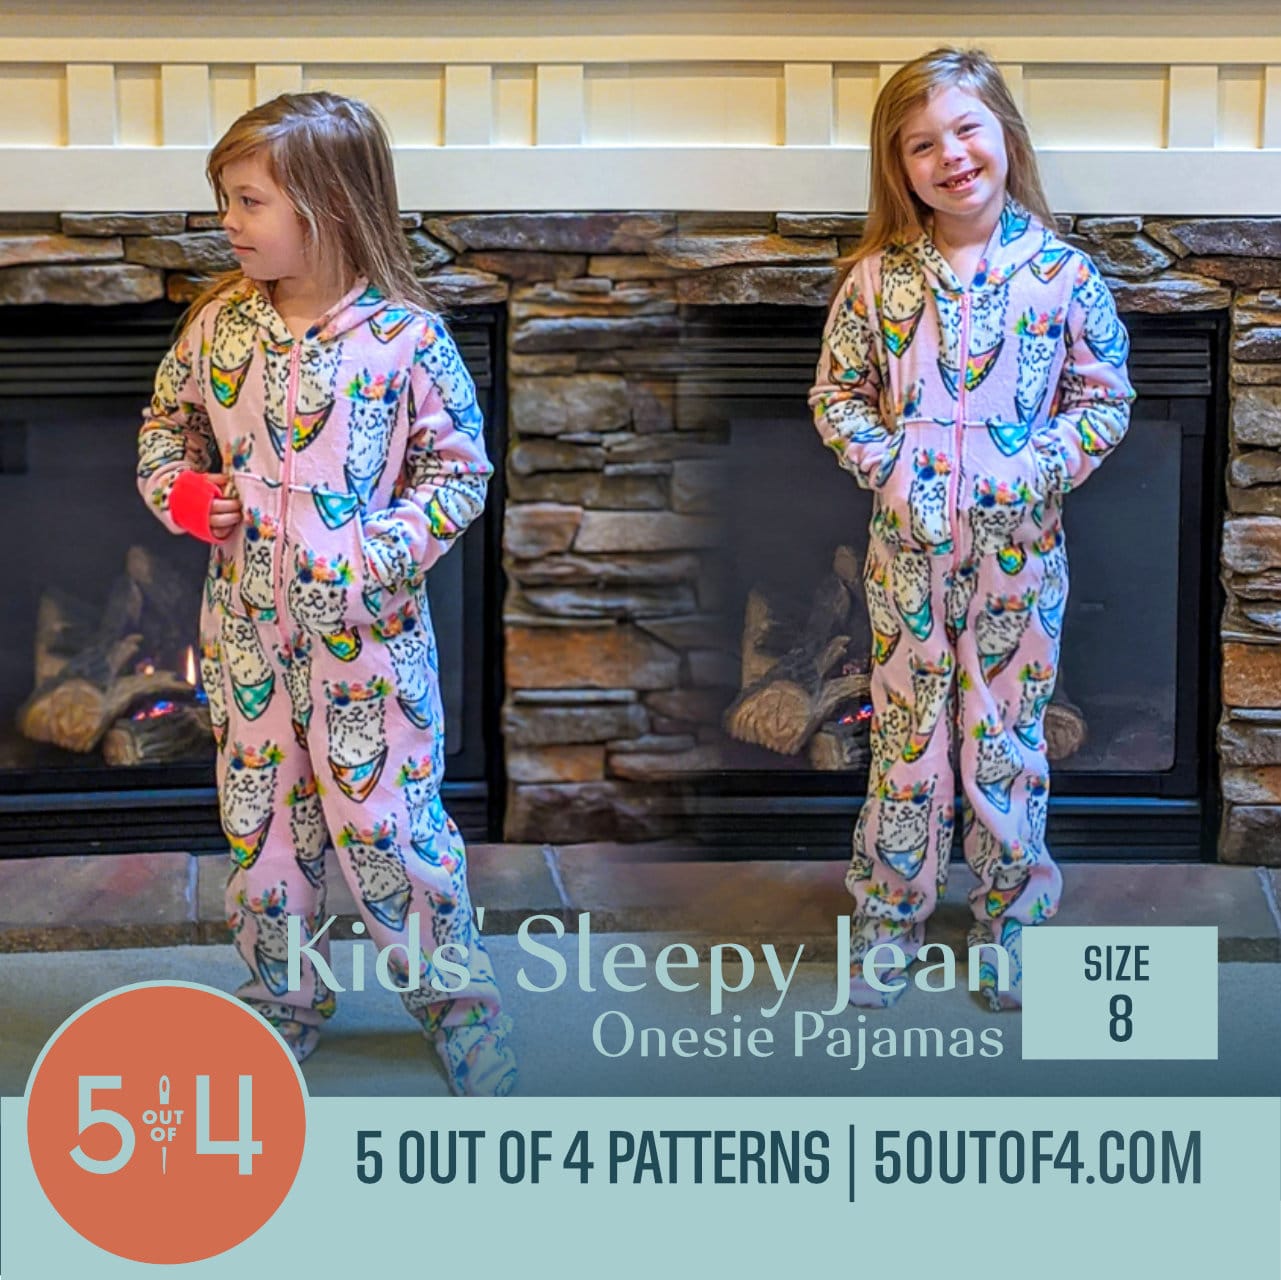 Misverstand rijstwijn drijvend Kids' Sleepy Jean Onesie Pajamas - 5 out of 4 Patterns